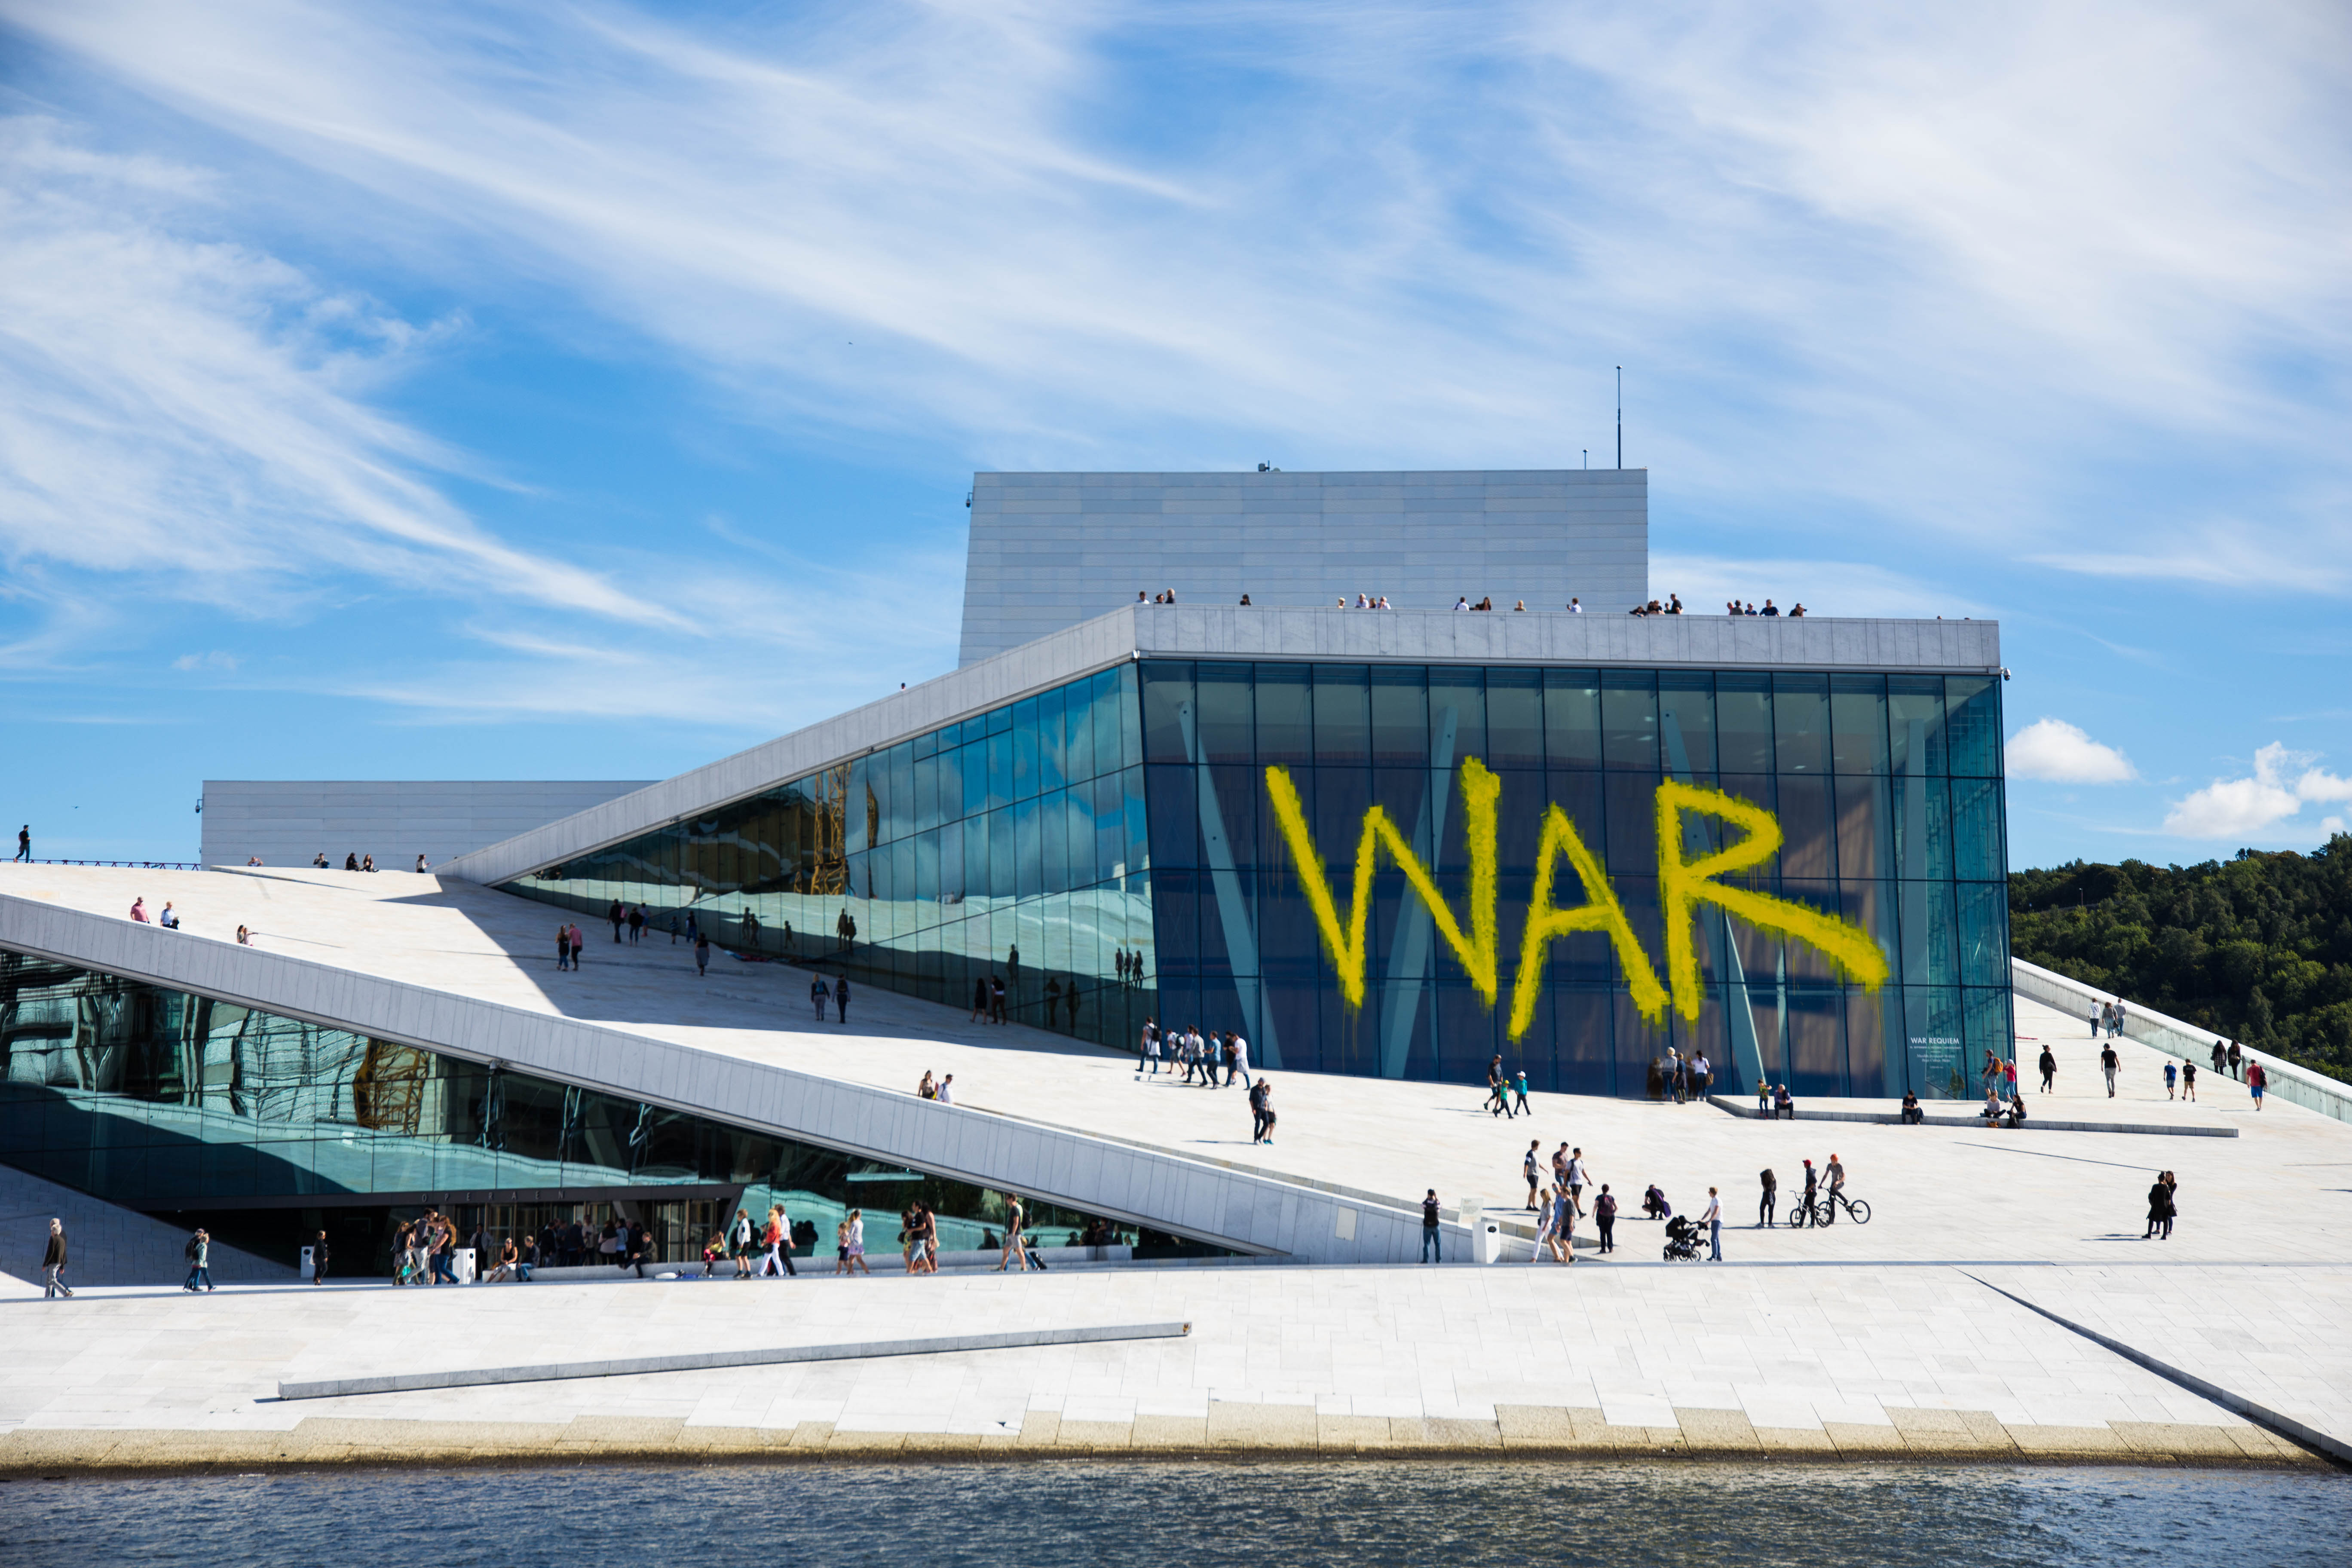 File:Oslo Opera House - War (29337636602).jpg - Wikimedia Commons